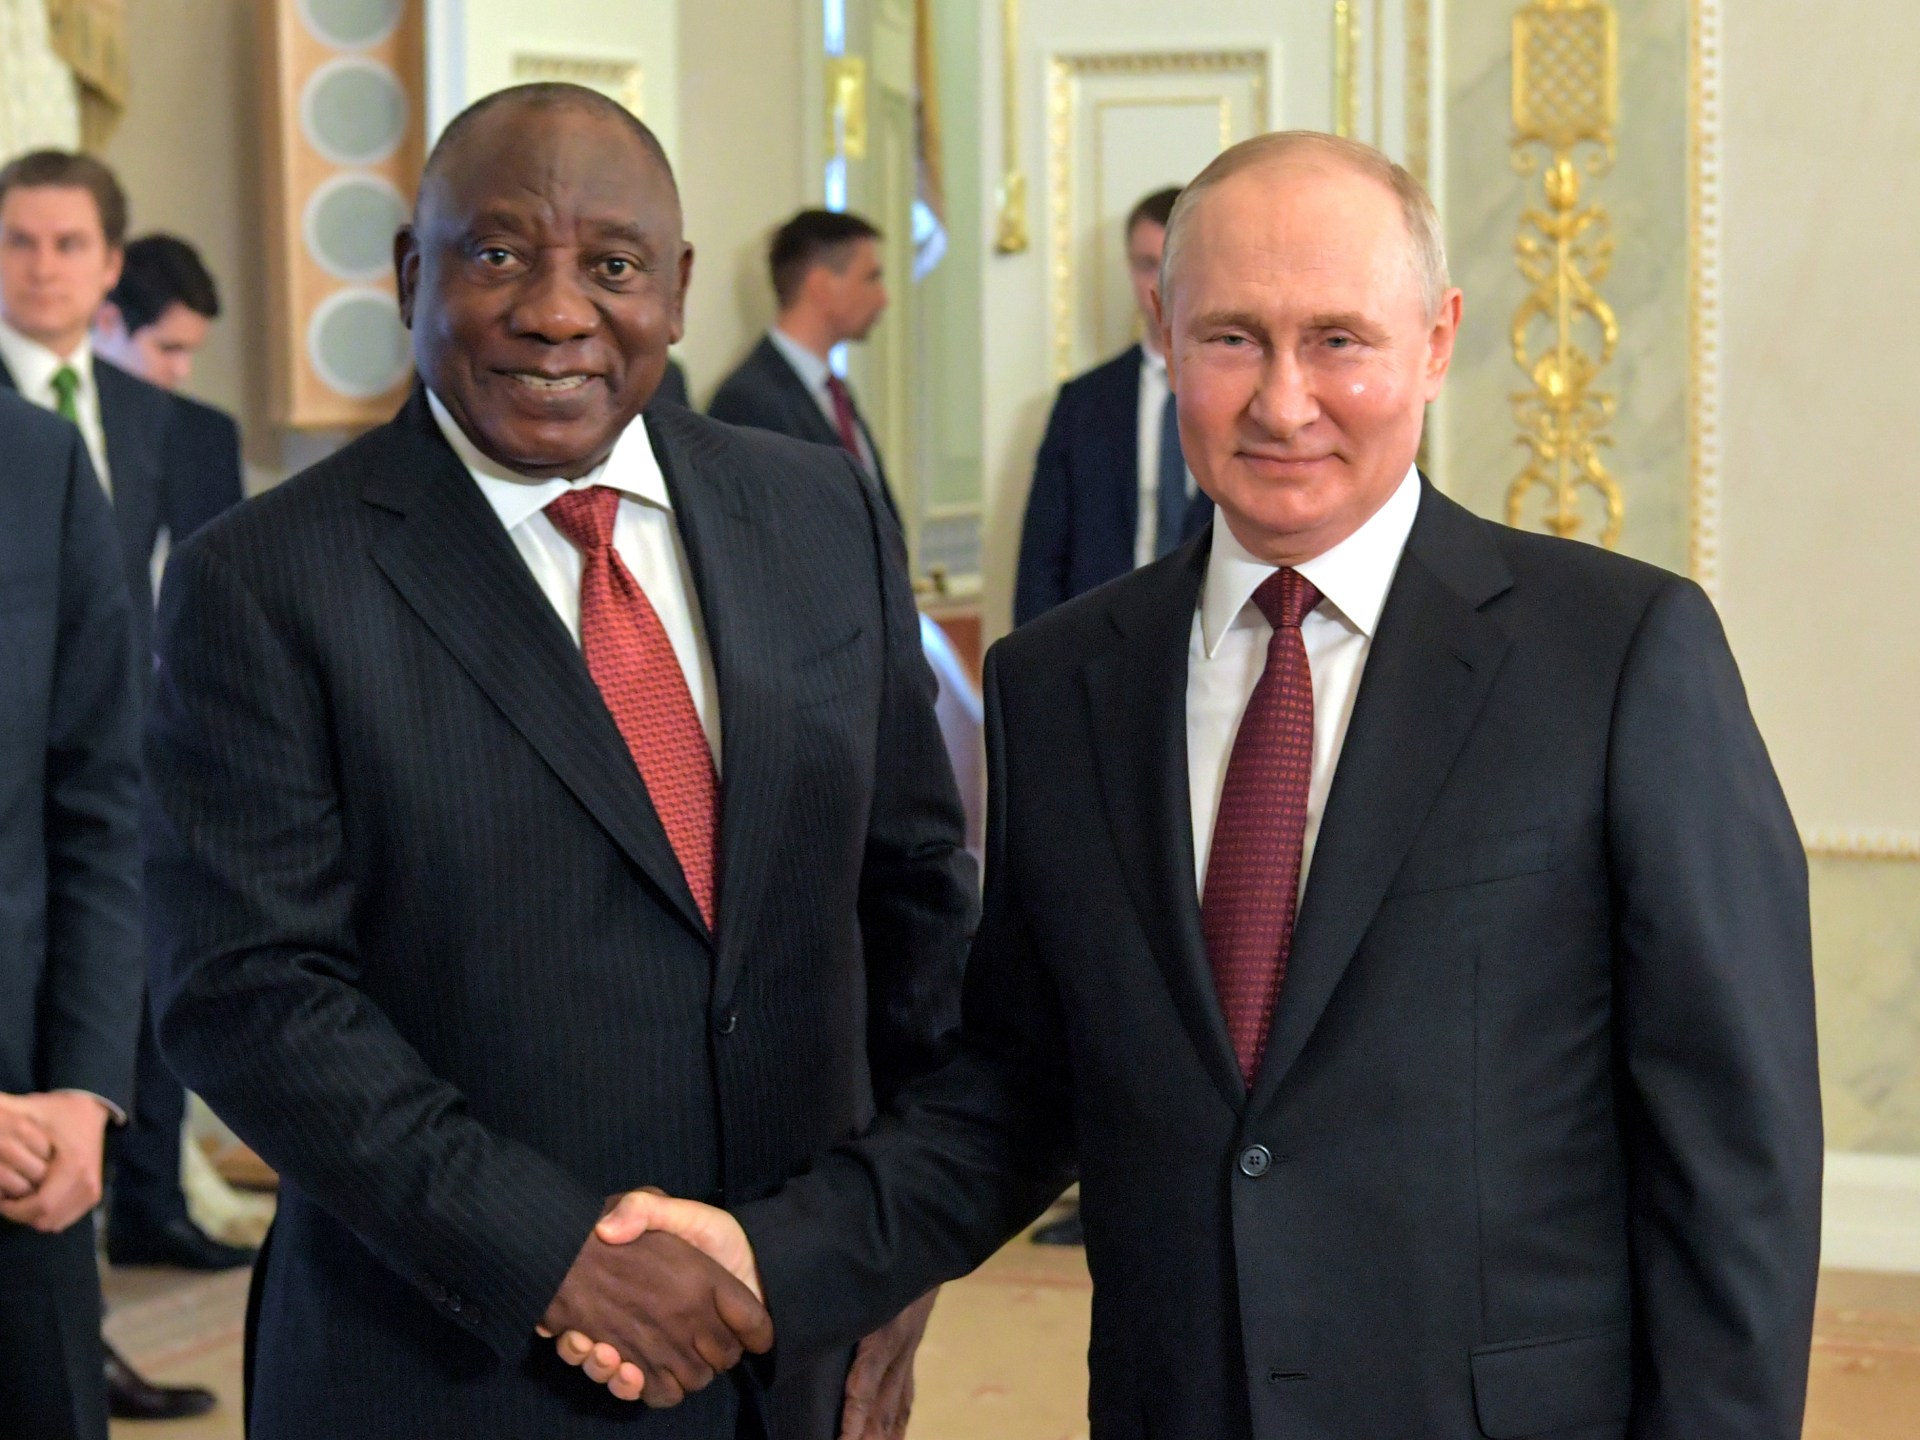 War in Ukraine must stop, South Africa’s Ramaphosa tells Putin | Russia-Ukraine war News